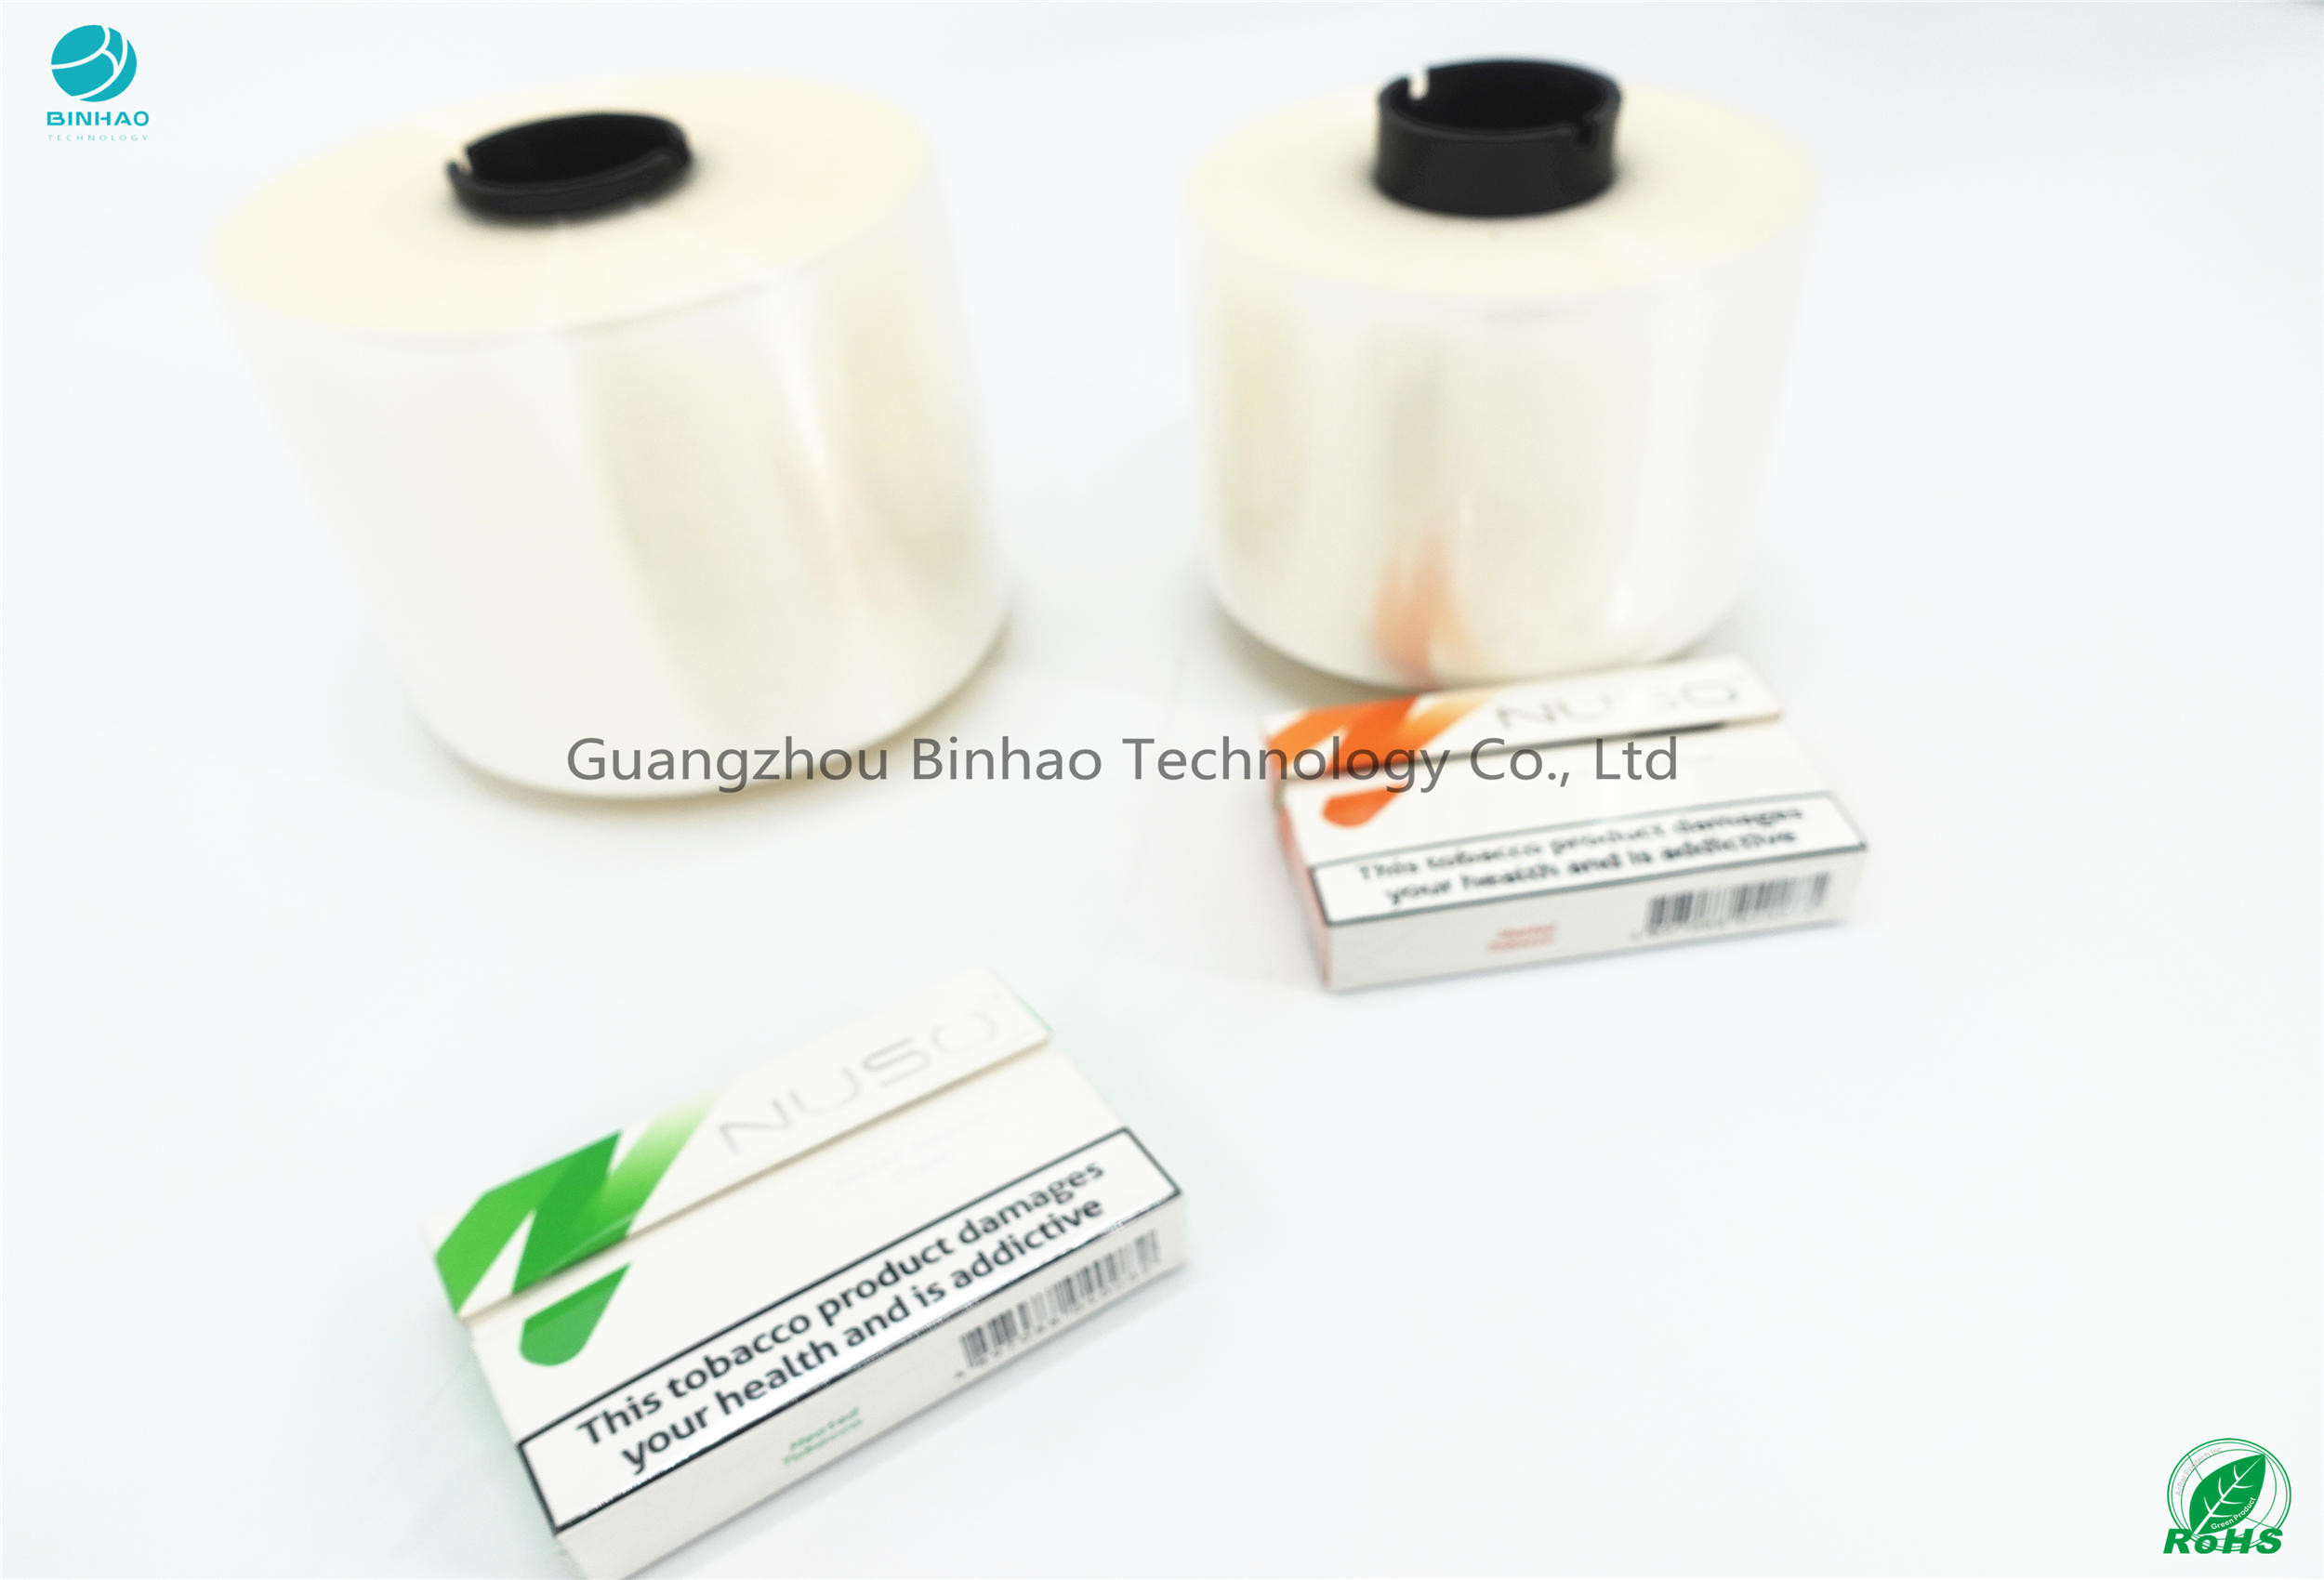 HNB E-Cigarette Package Materials 2.5mm Width Tear Strip Tape Strong Elastic